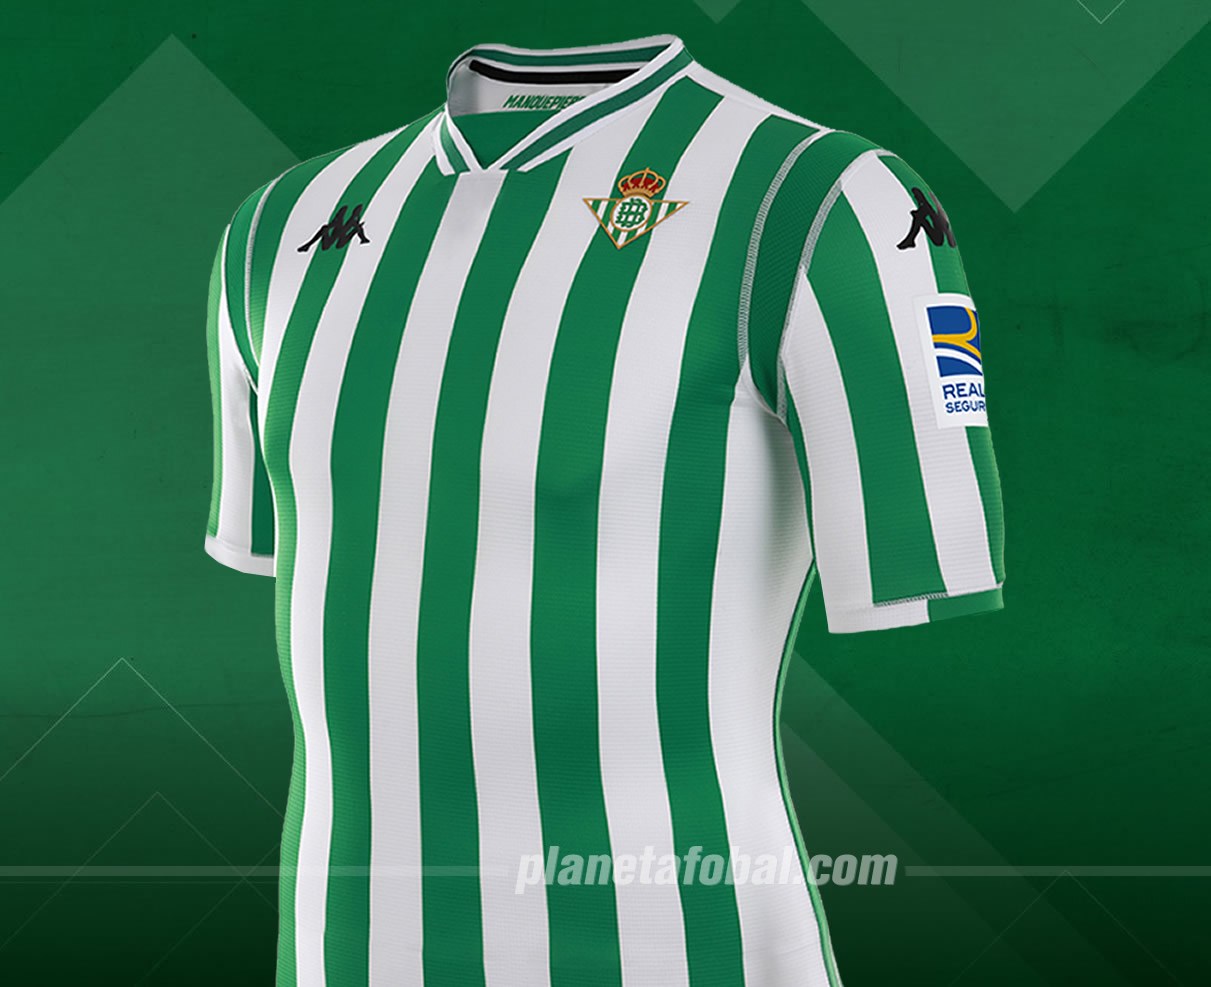 Camiseta titular Kappar 2018/19 del Real Betis | Imagen Web Oficial